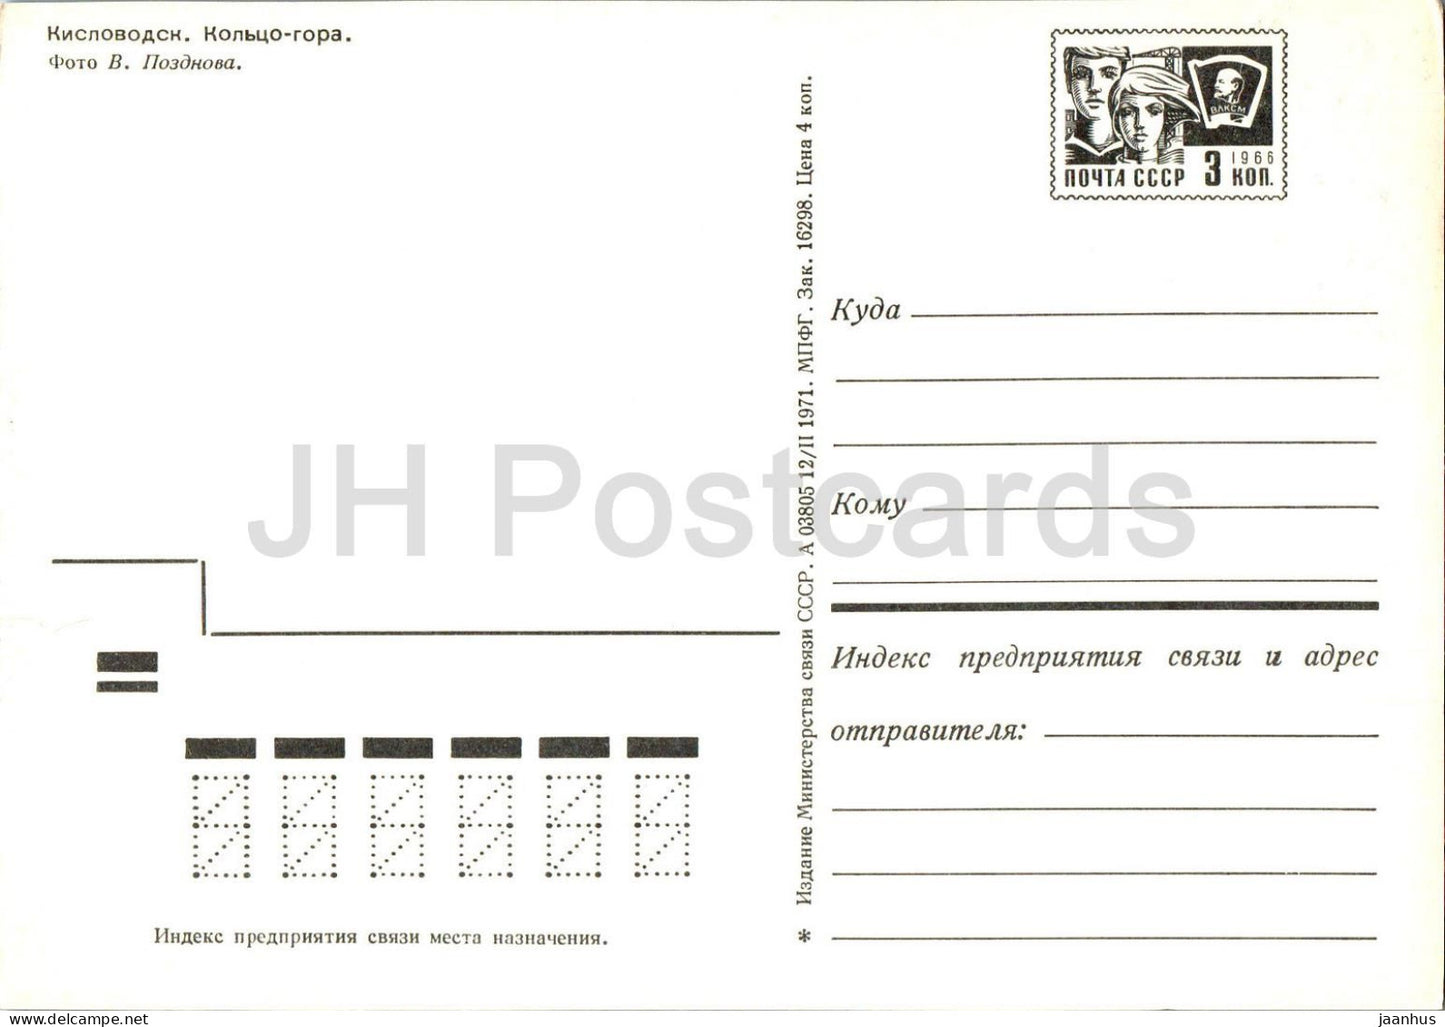 Kislovodsk - Ring Hill - entier postal - 1971 - Russie URSS - inutilisé 